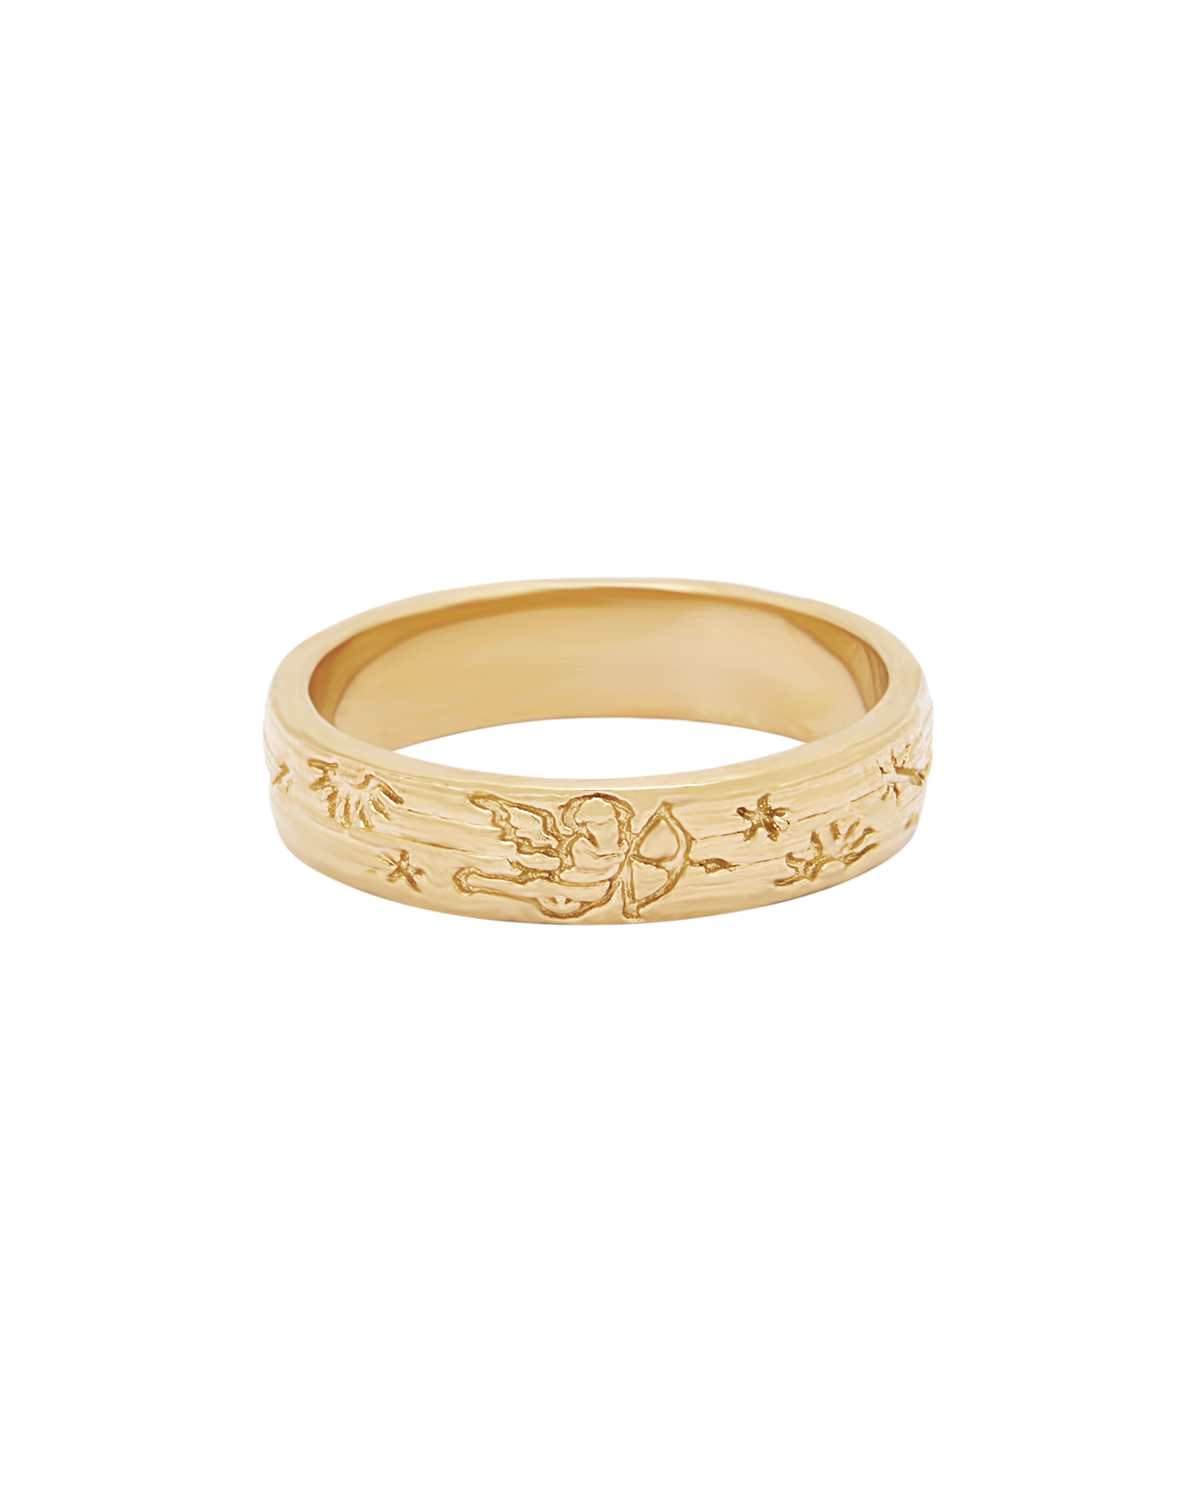 14/20 Gold Filled V Design Band Ring | Thin Band V Ring | Delicate Band Ring